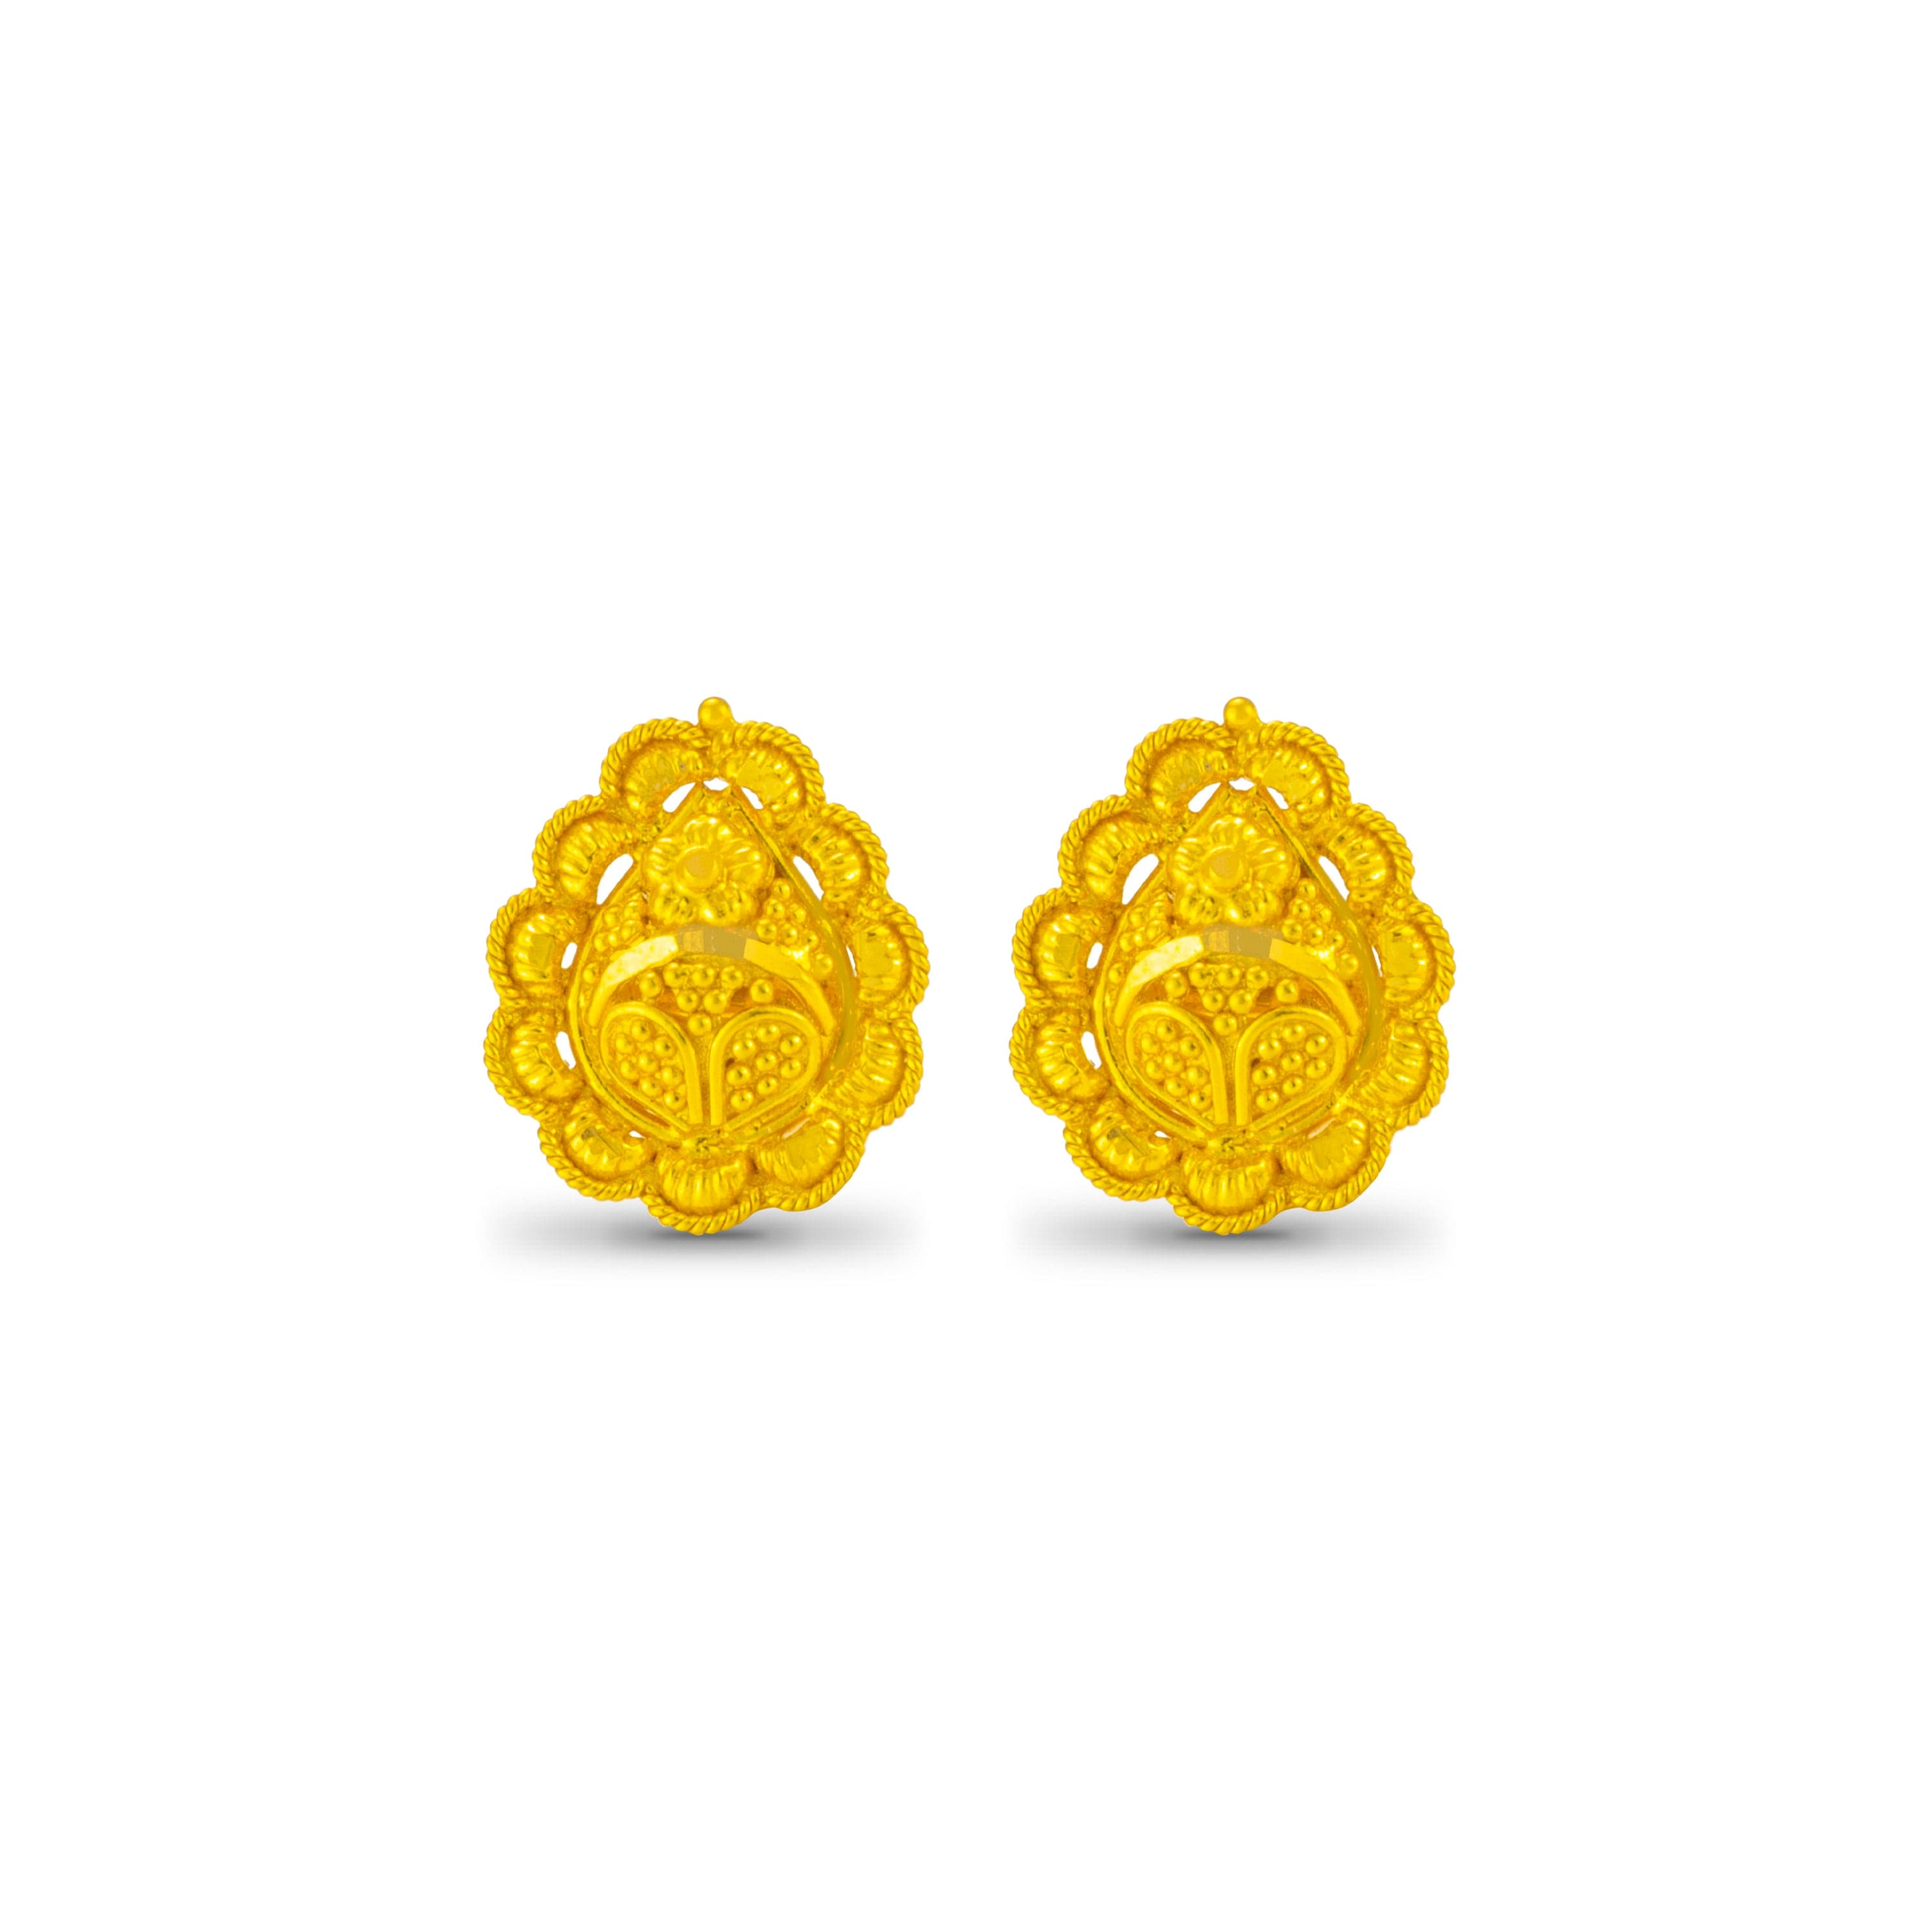 Mia by Tanishq 2.7 g 14KT Gold Precious Plain Earrings